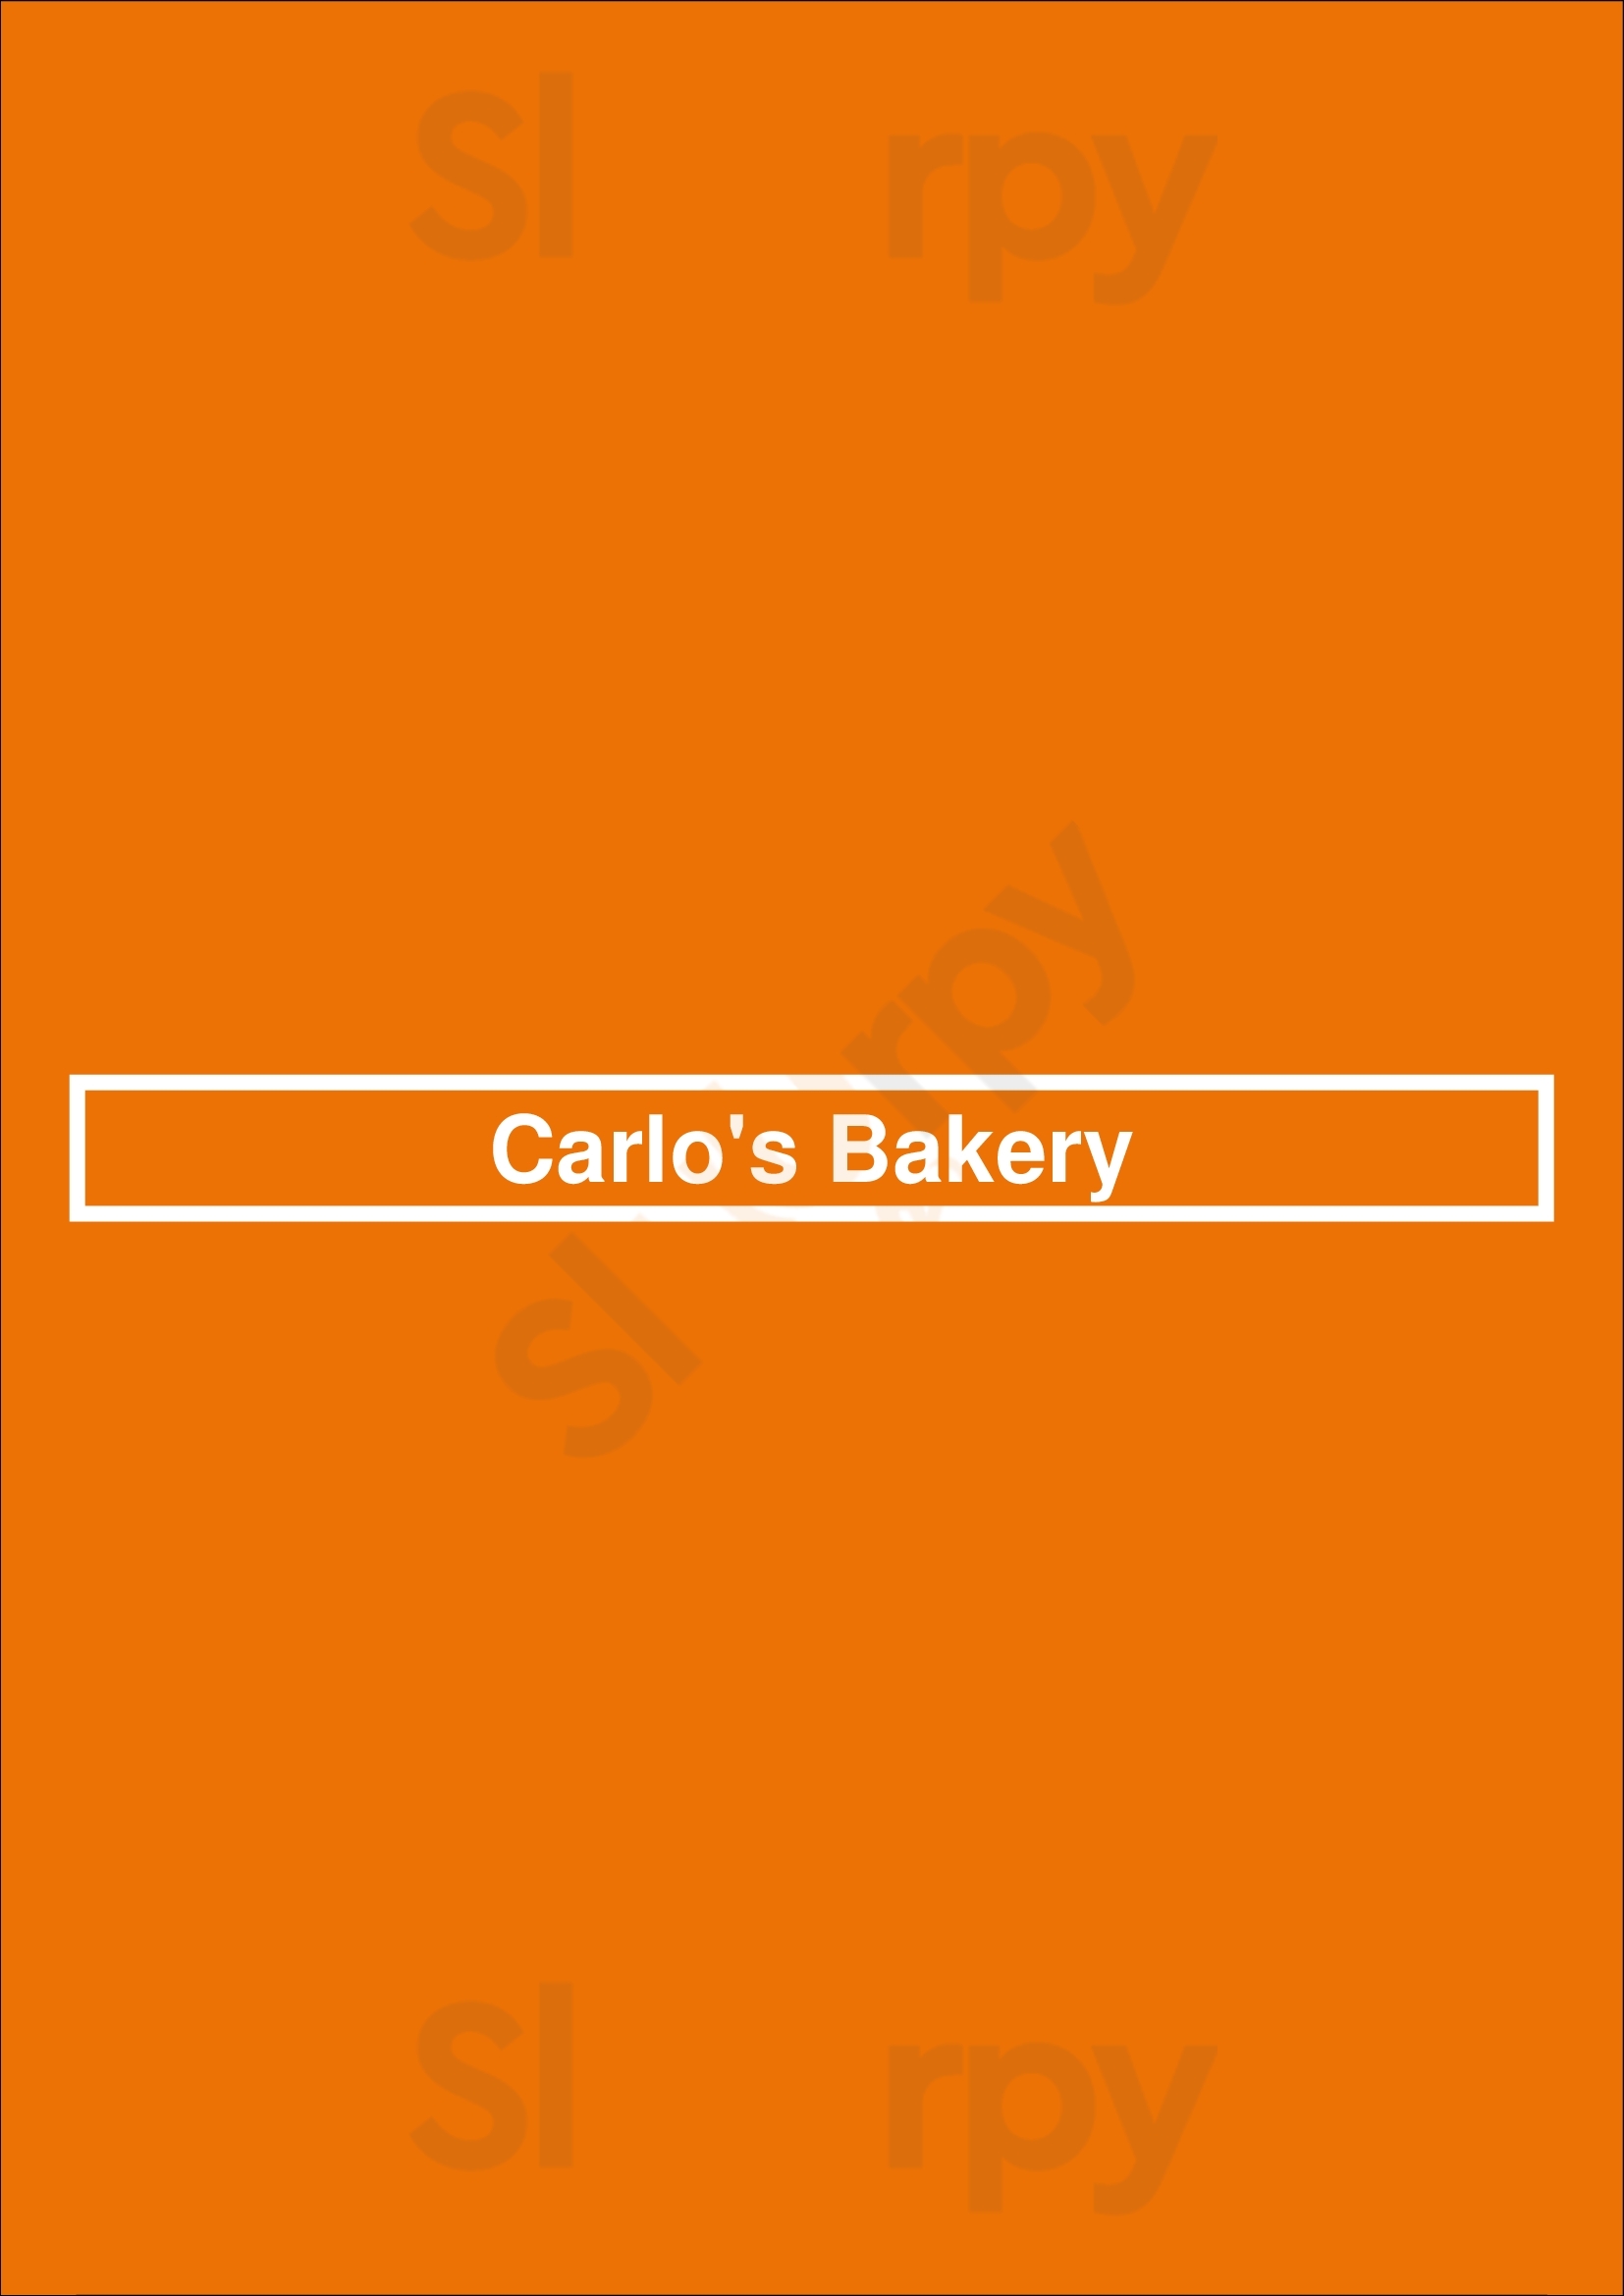 Carlo's Bakery Dallas Menu - 1